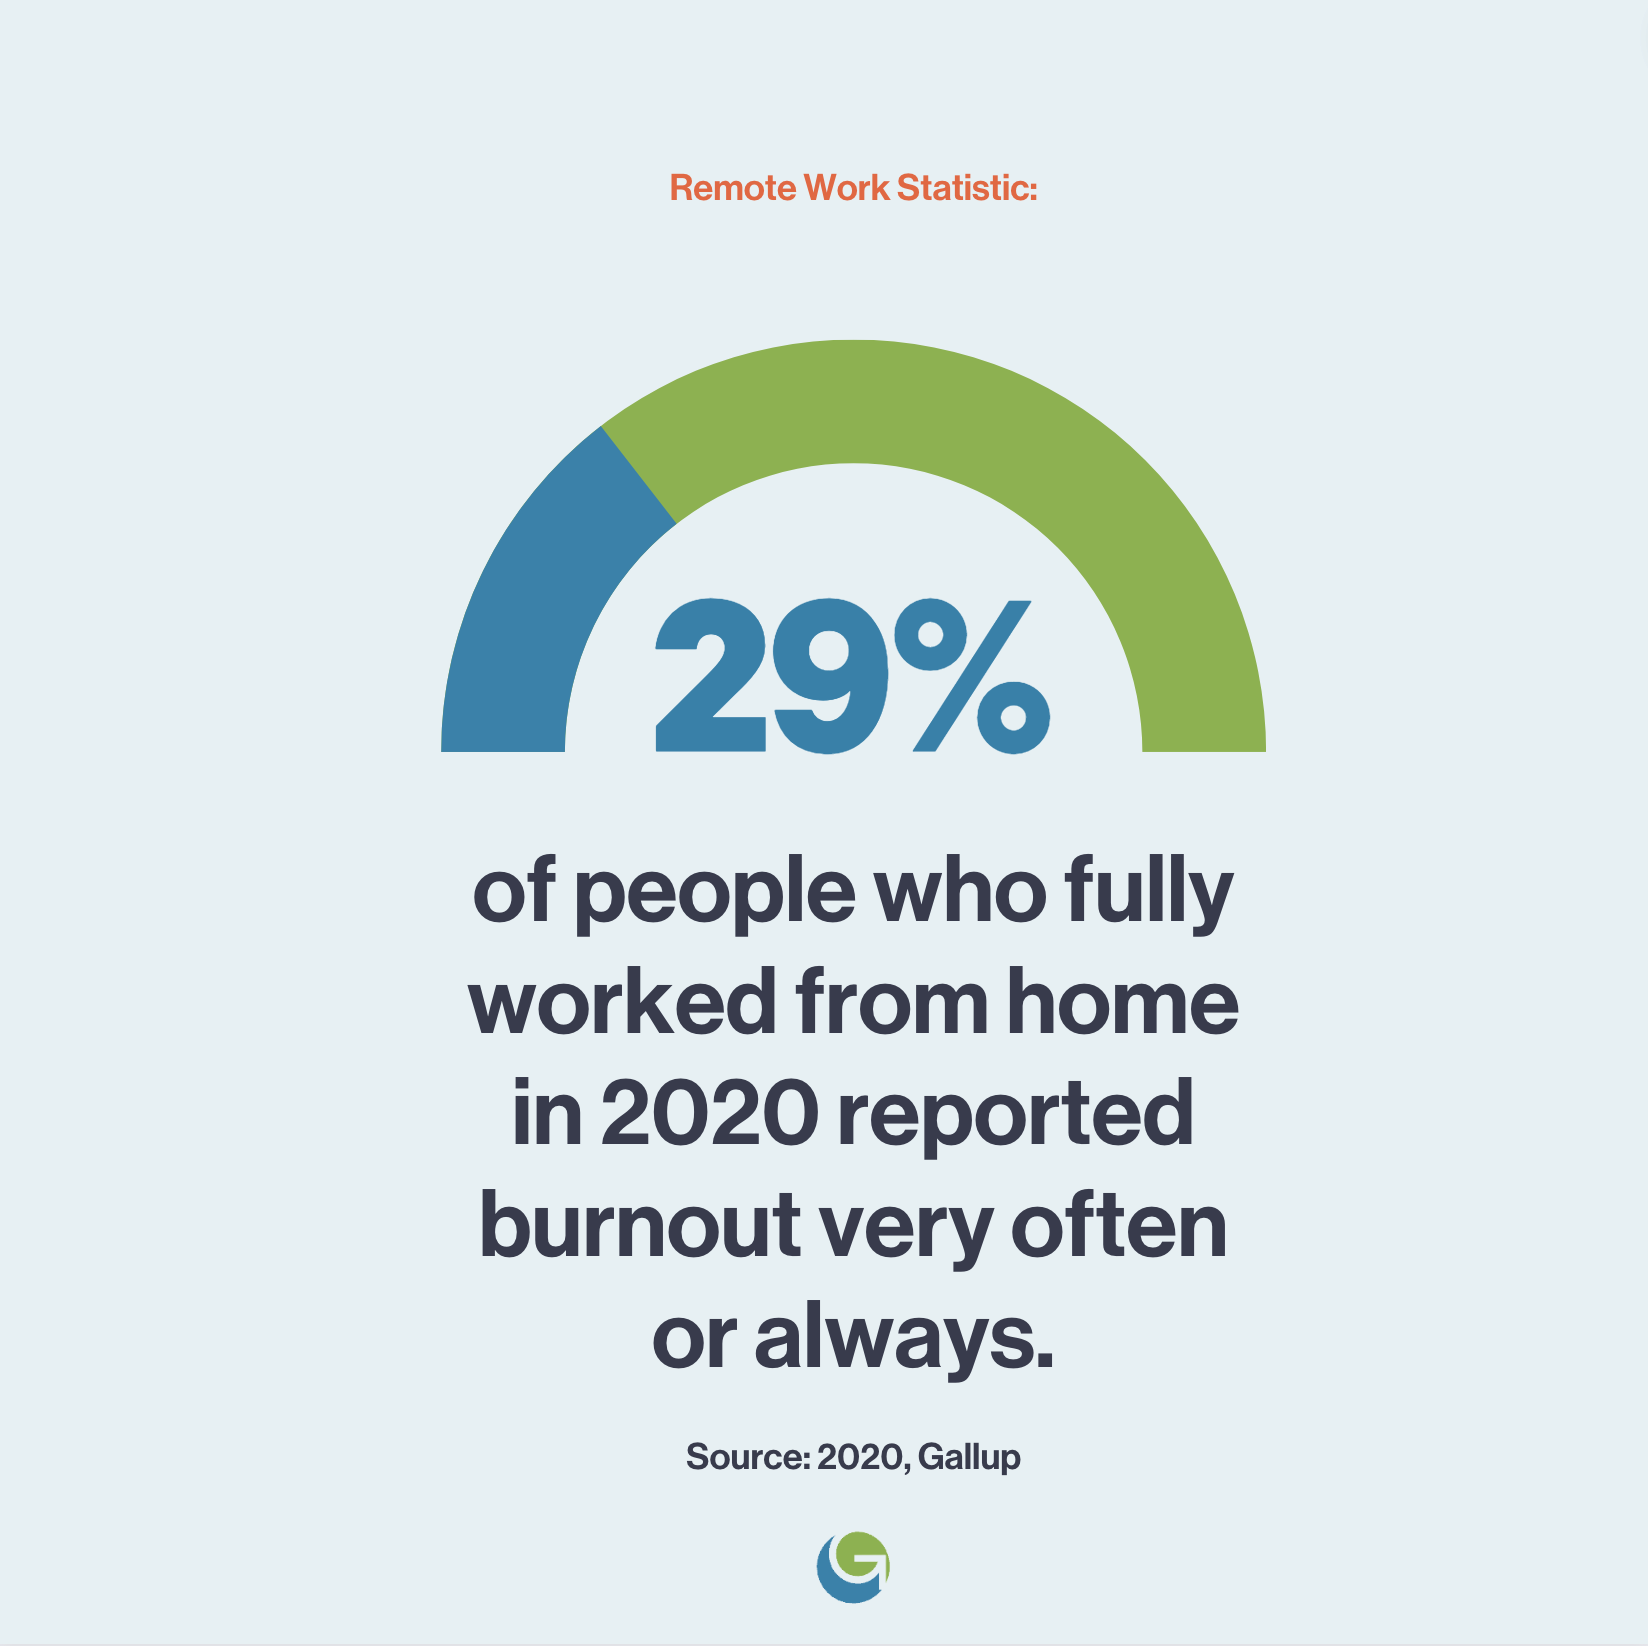 Remote Work Burnout Statistic